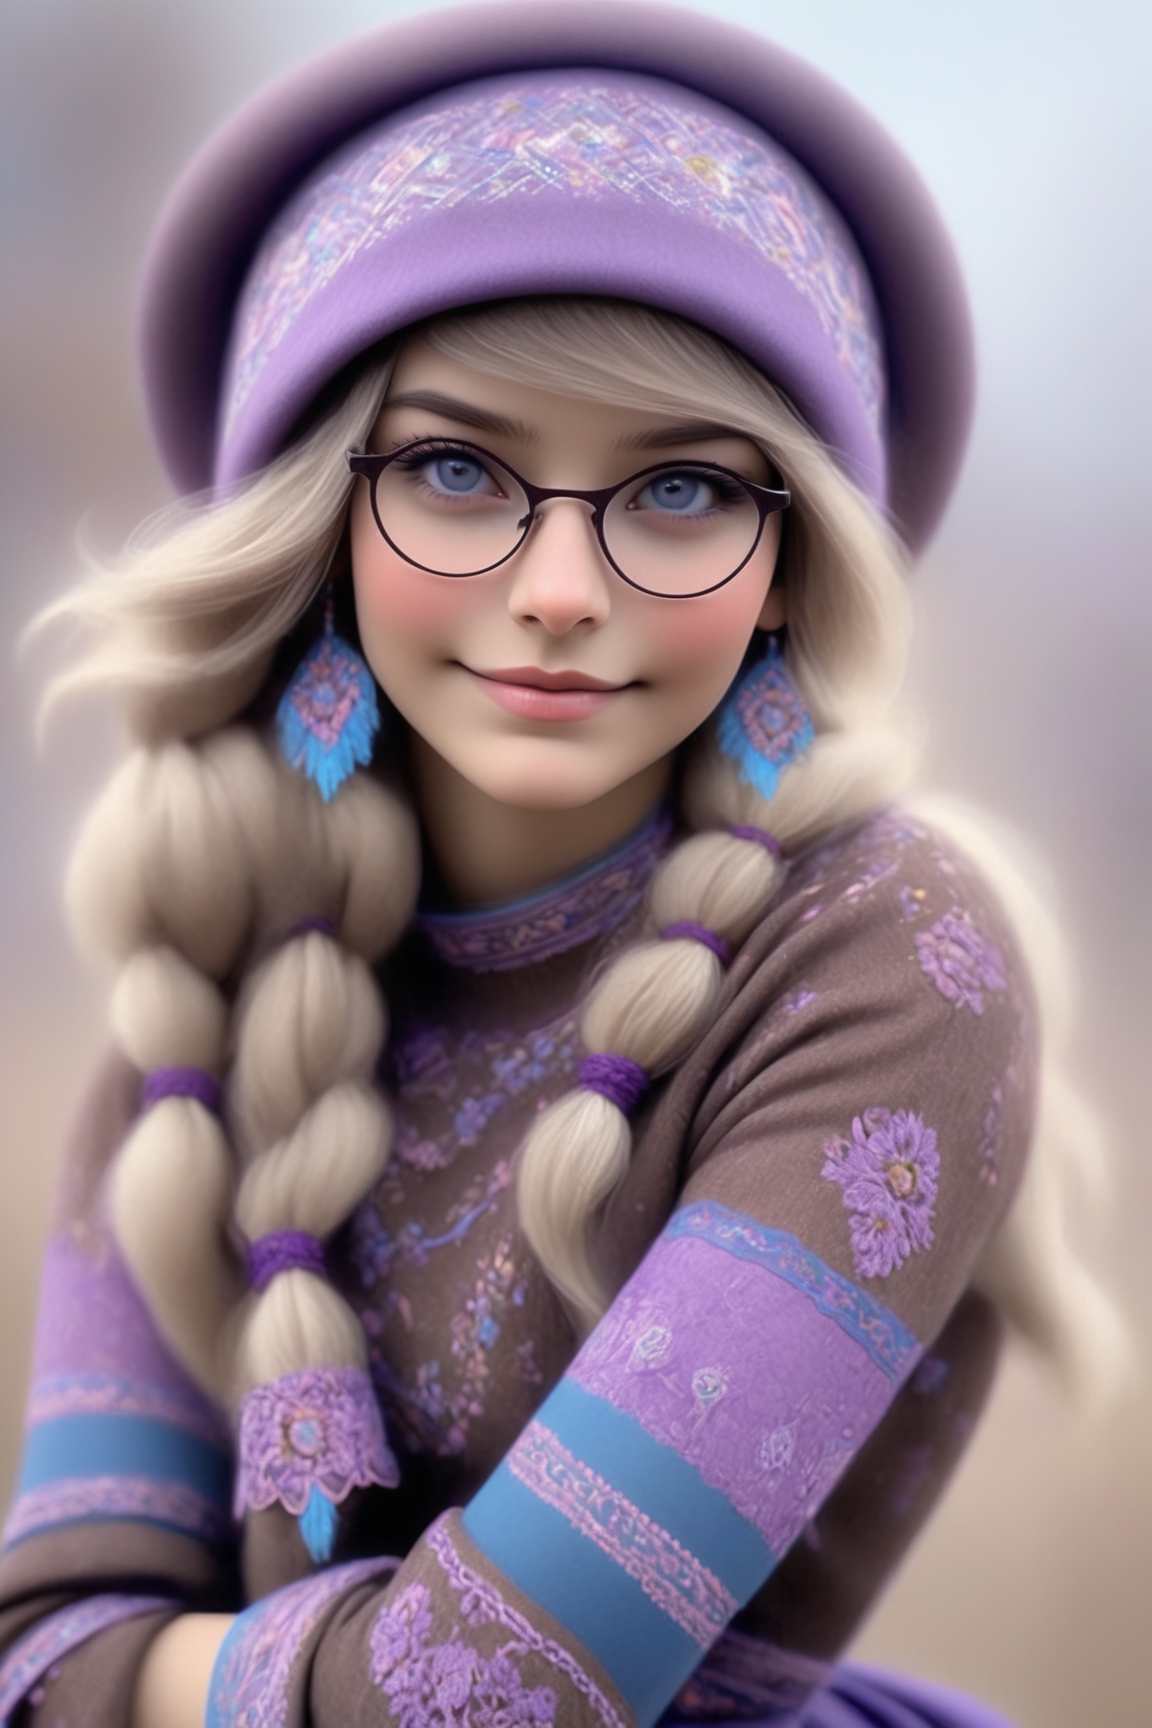 Beautiful blonde Ukrainian girl with blue eyes in folk clothing